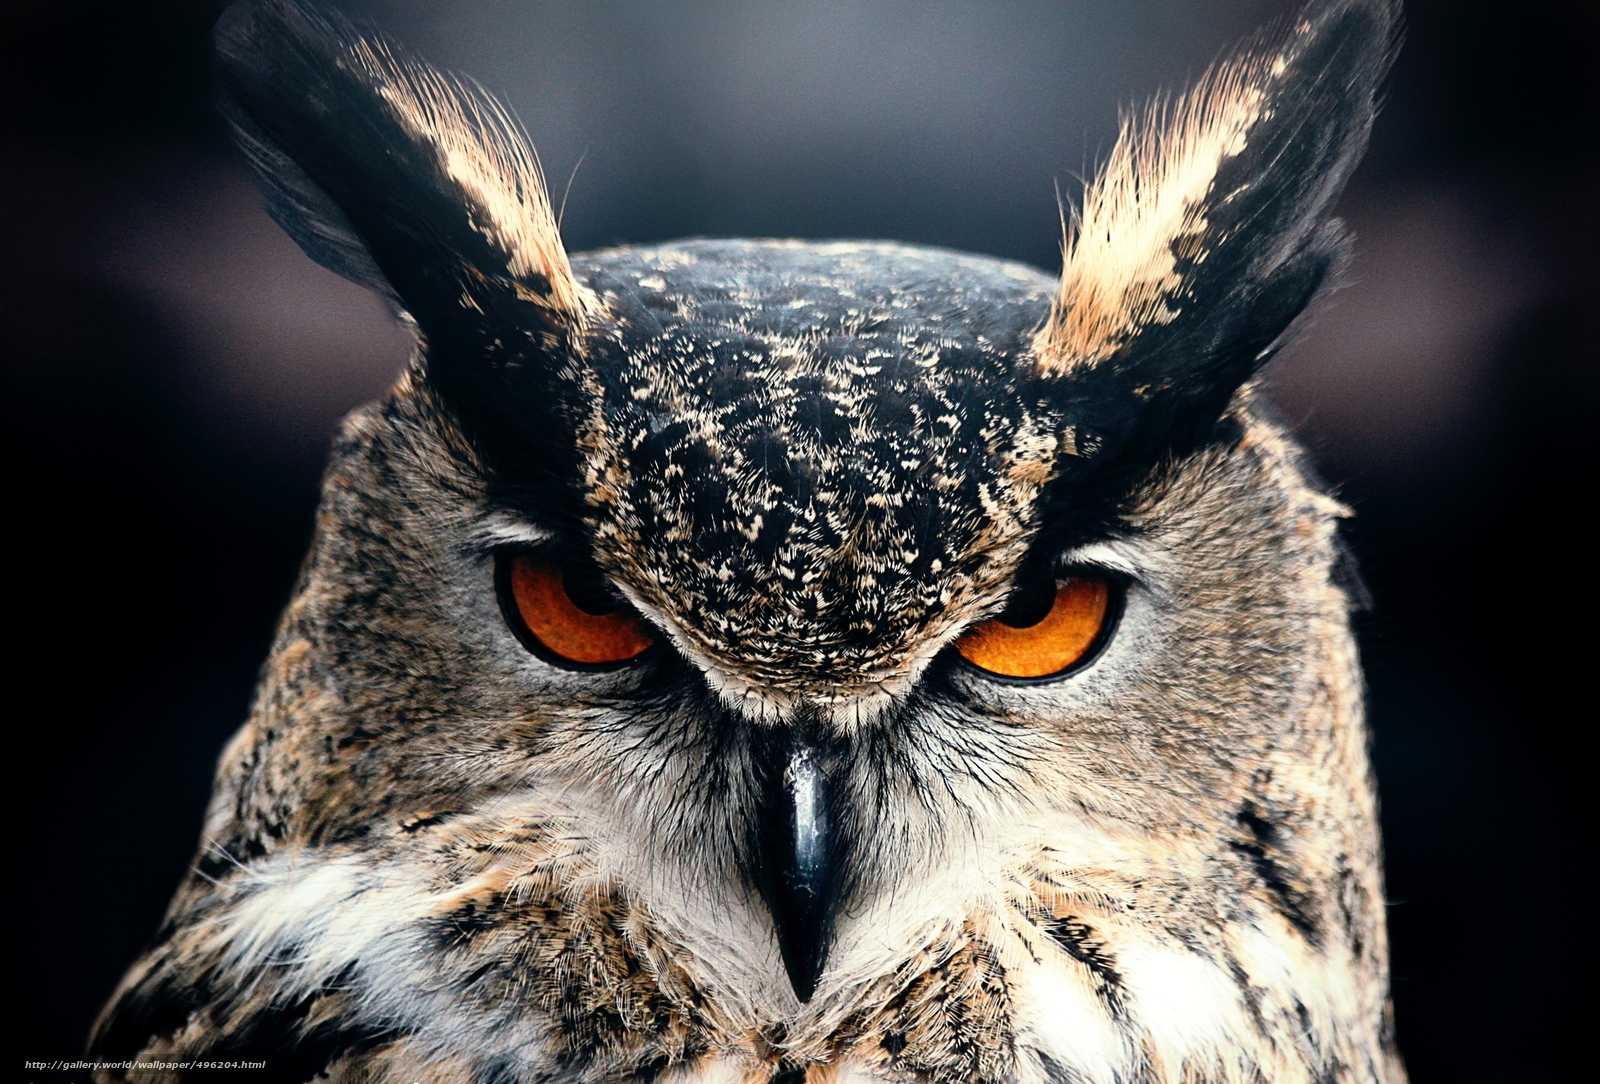 Wallpaper Owl Eyebrows Desktop In The